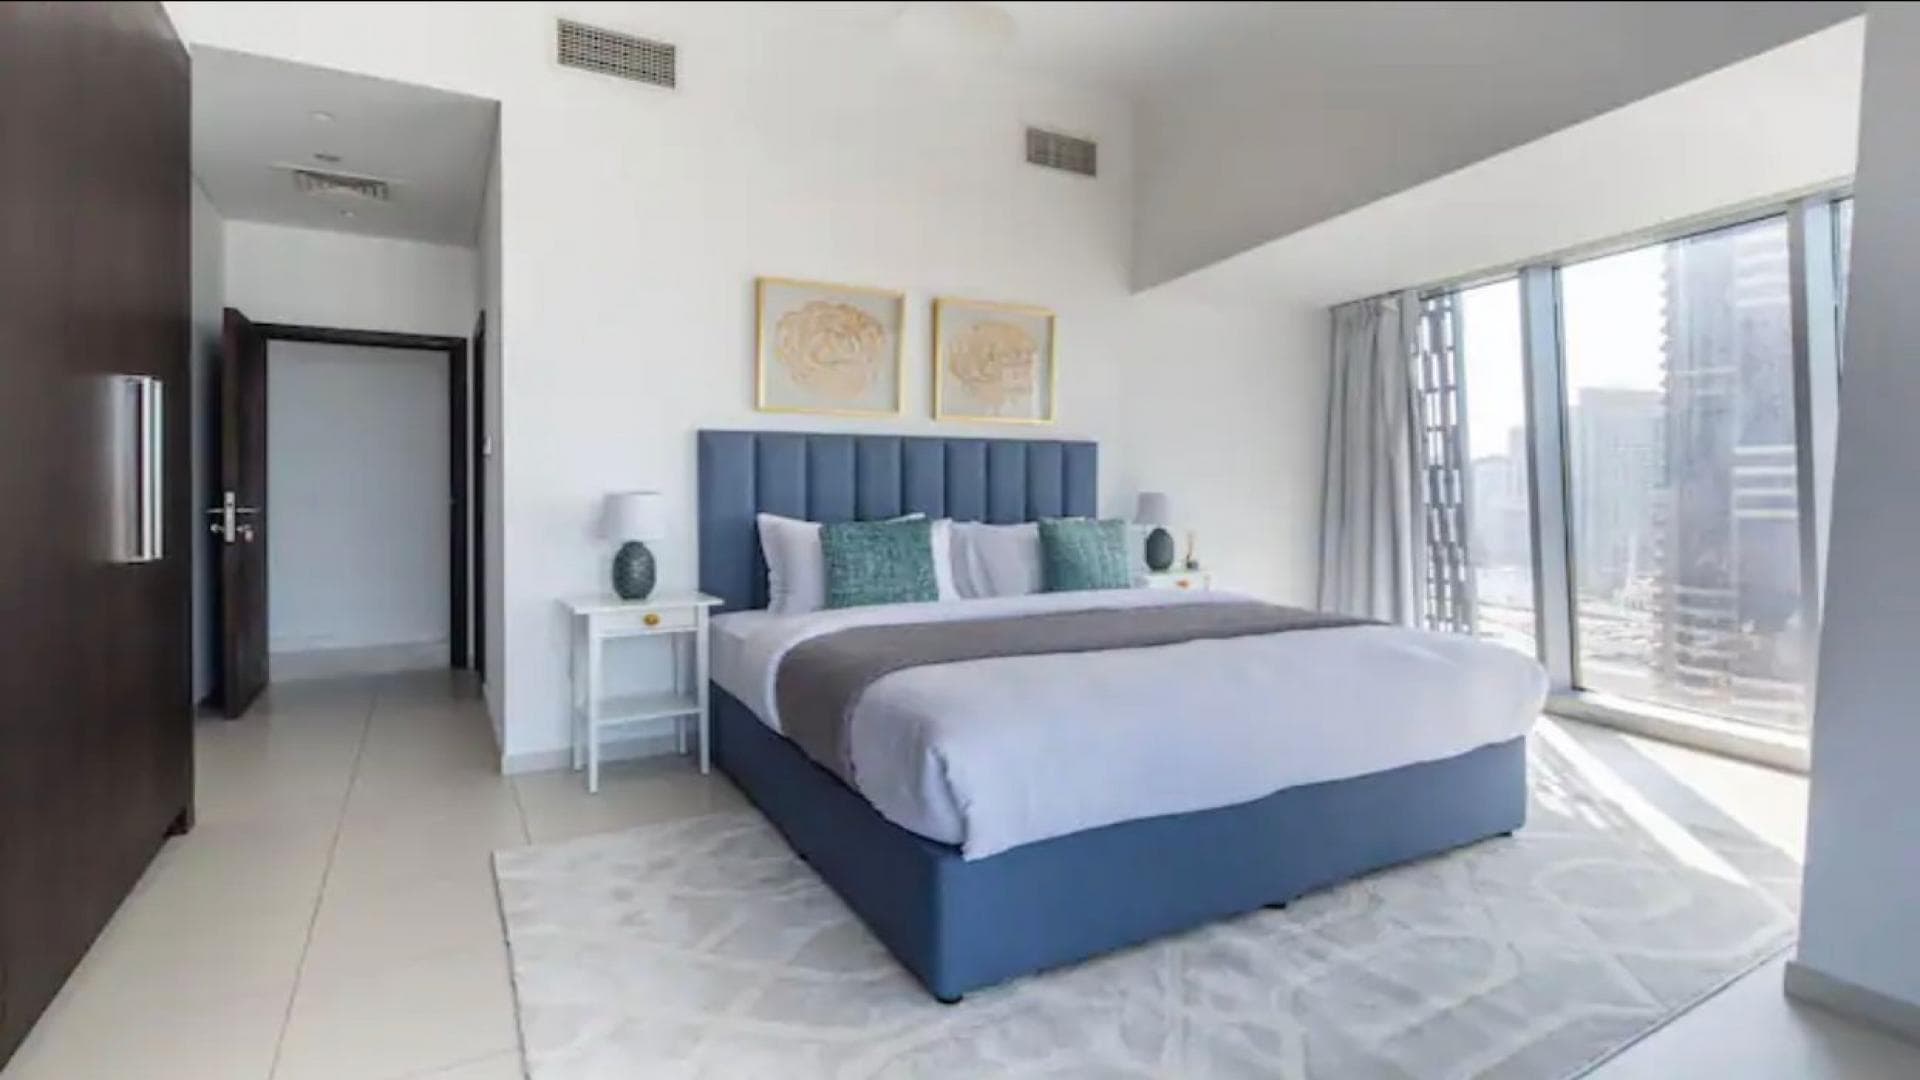 2 Bedroom Apartment For Rent Lavender 2 Lp37796 1a2094c610e6eb00.jpeg